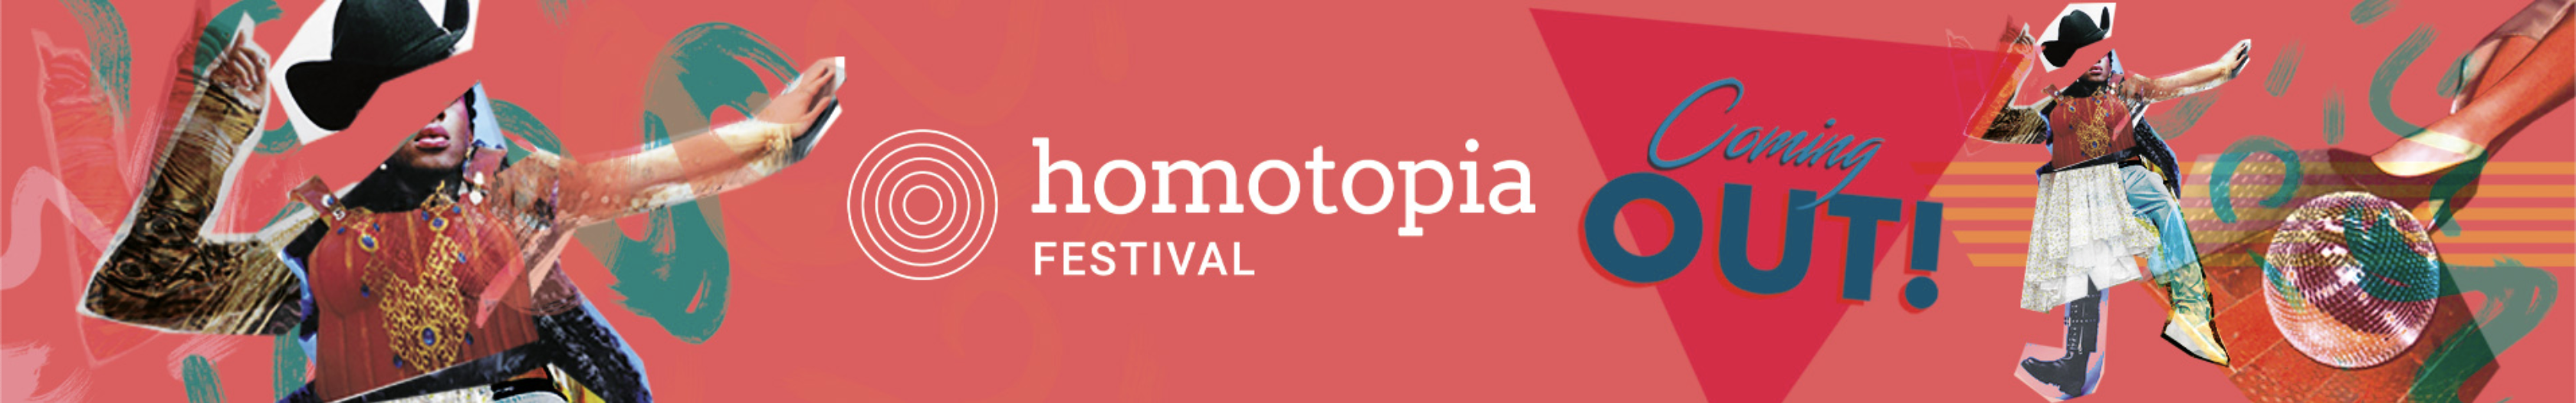 Homotopia Festival 2021